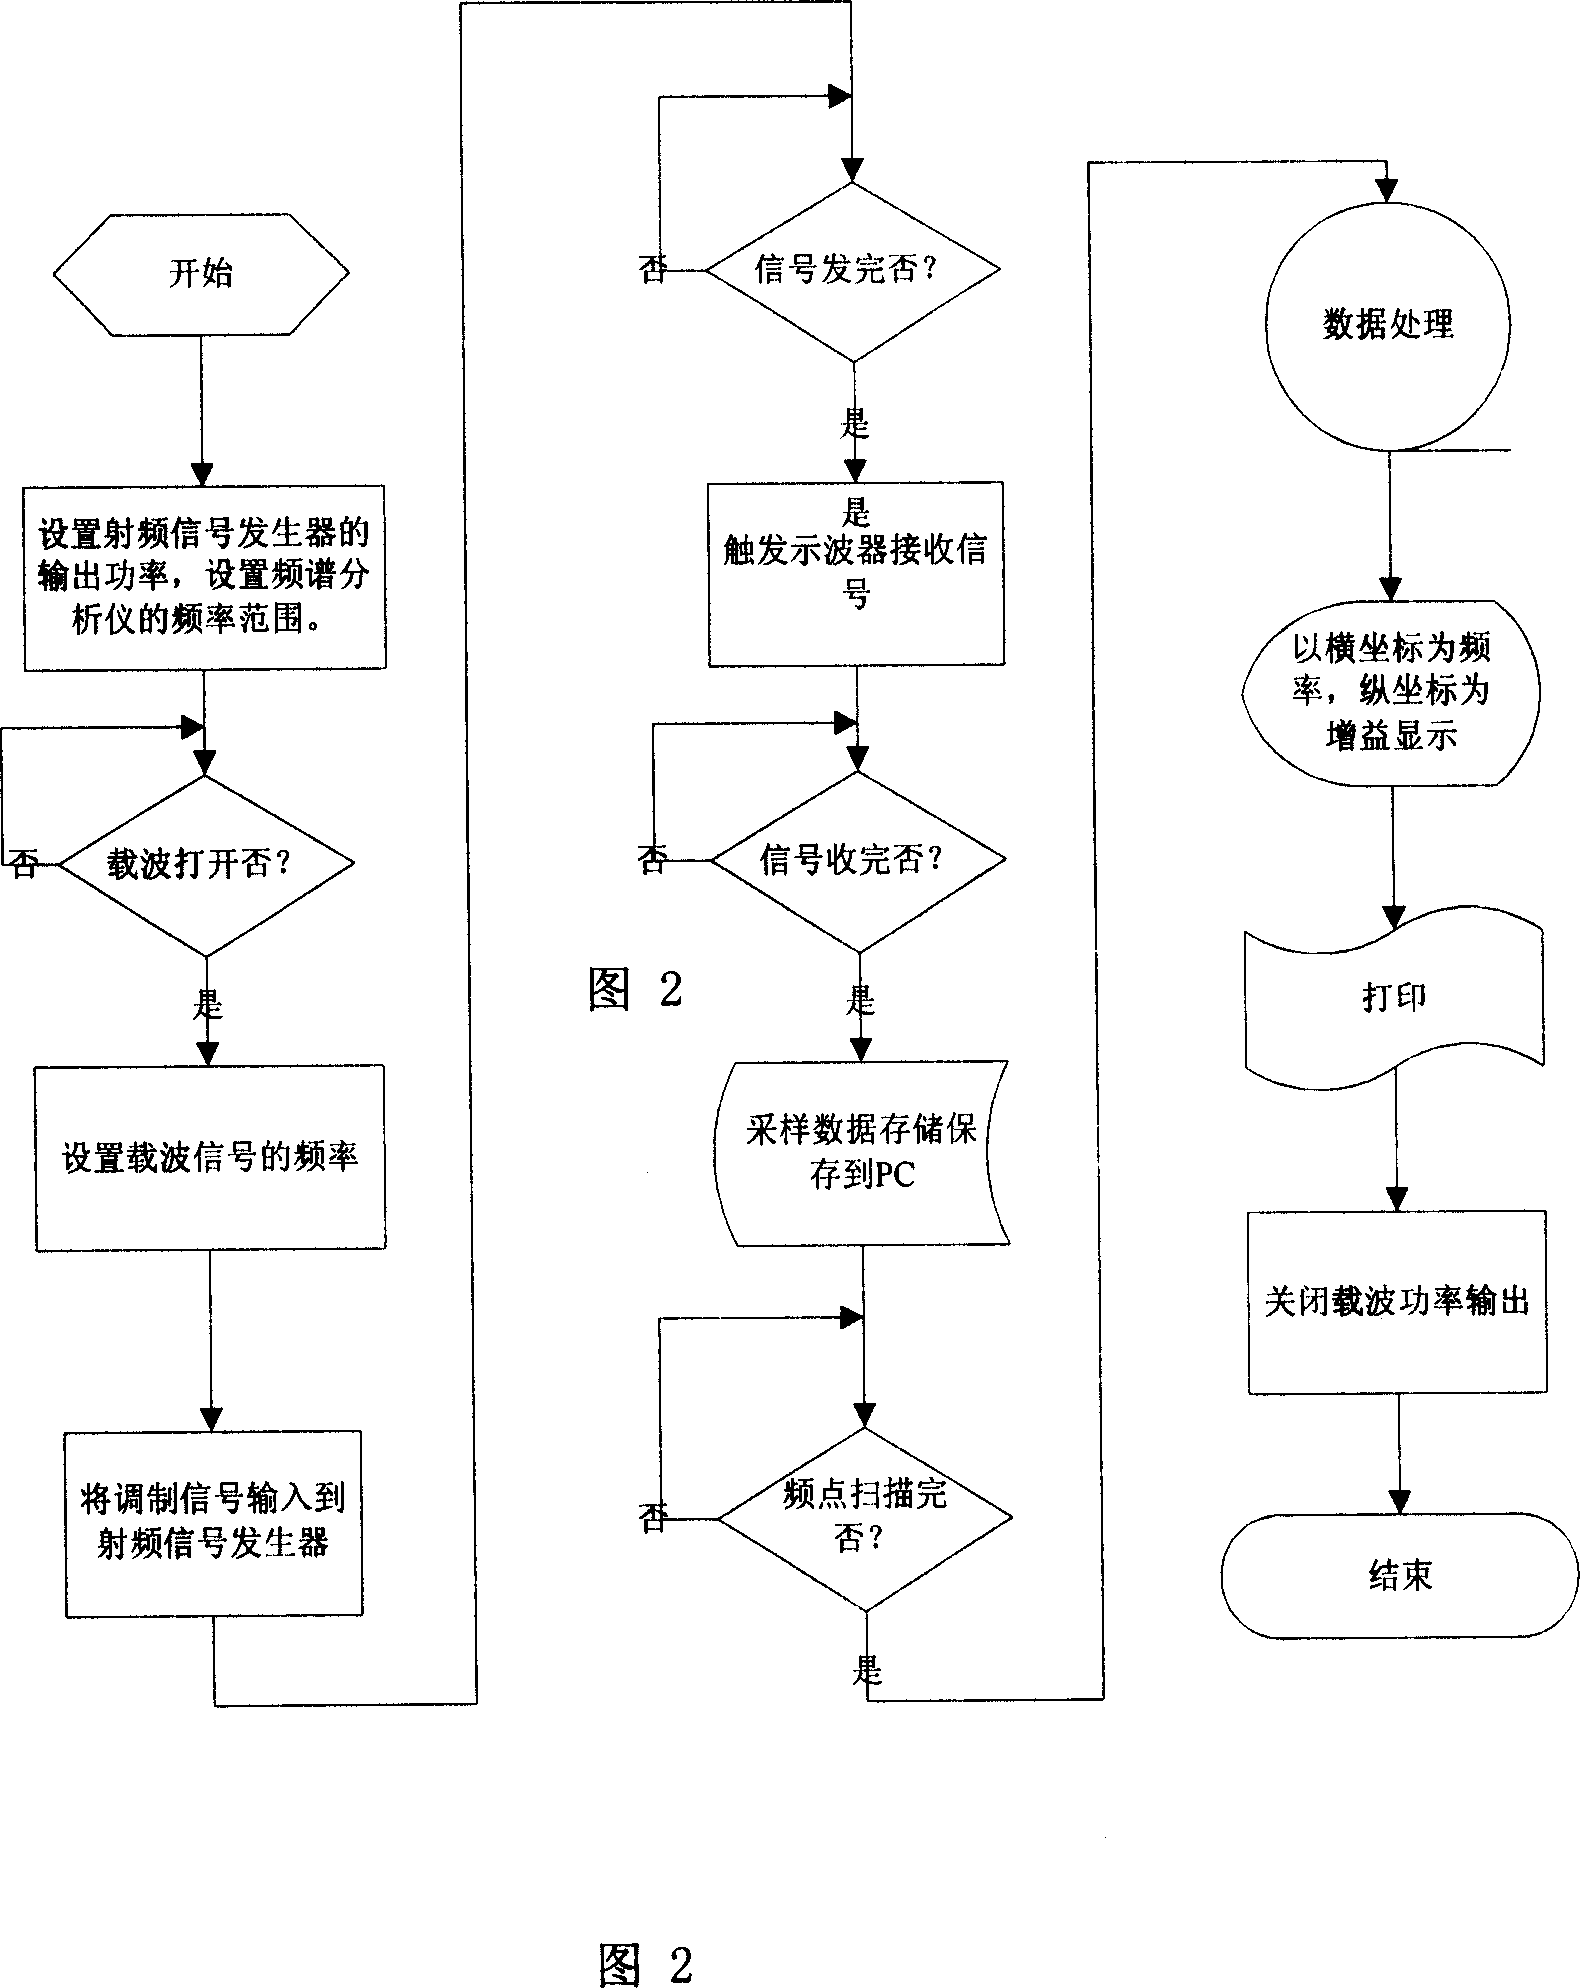 Test method of RF mark